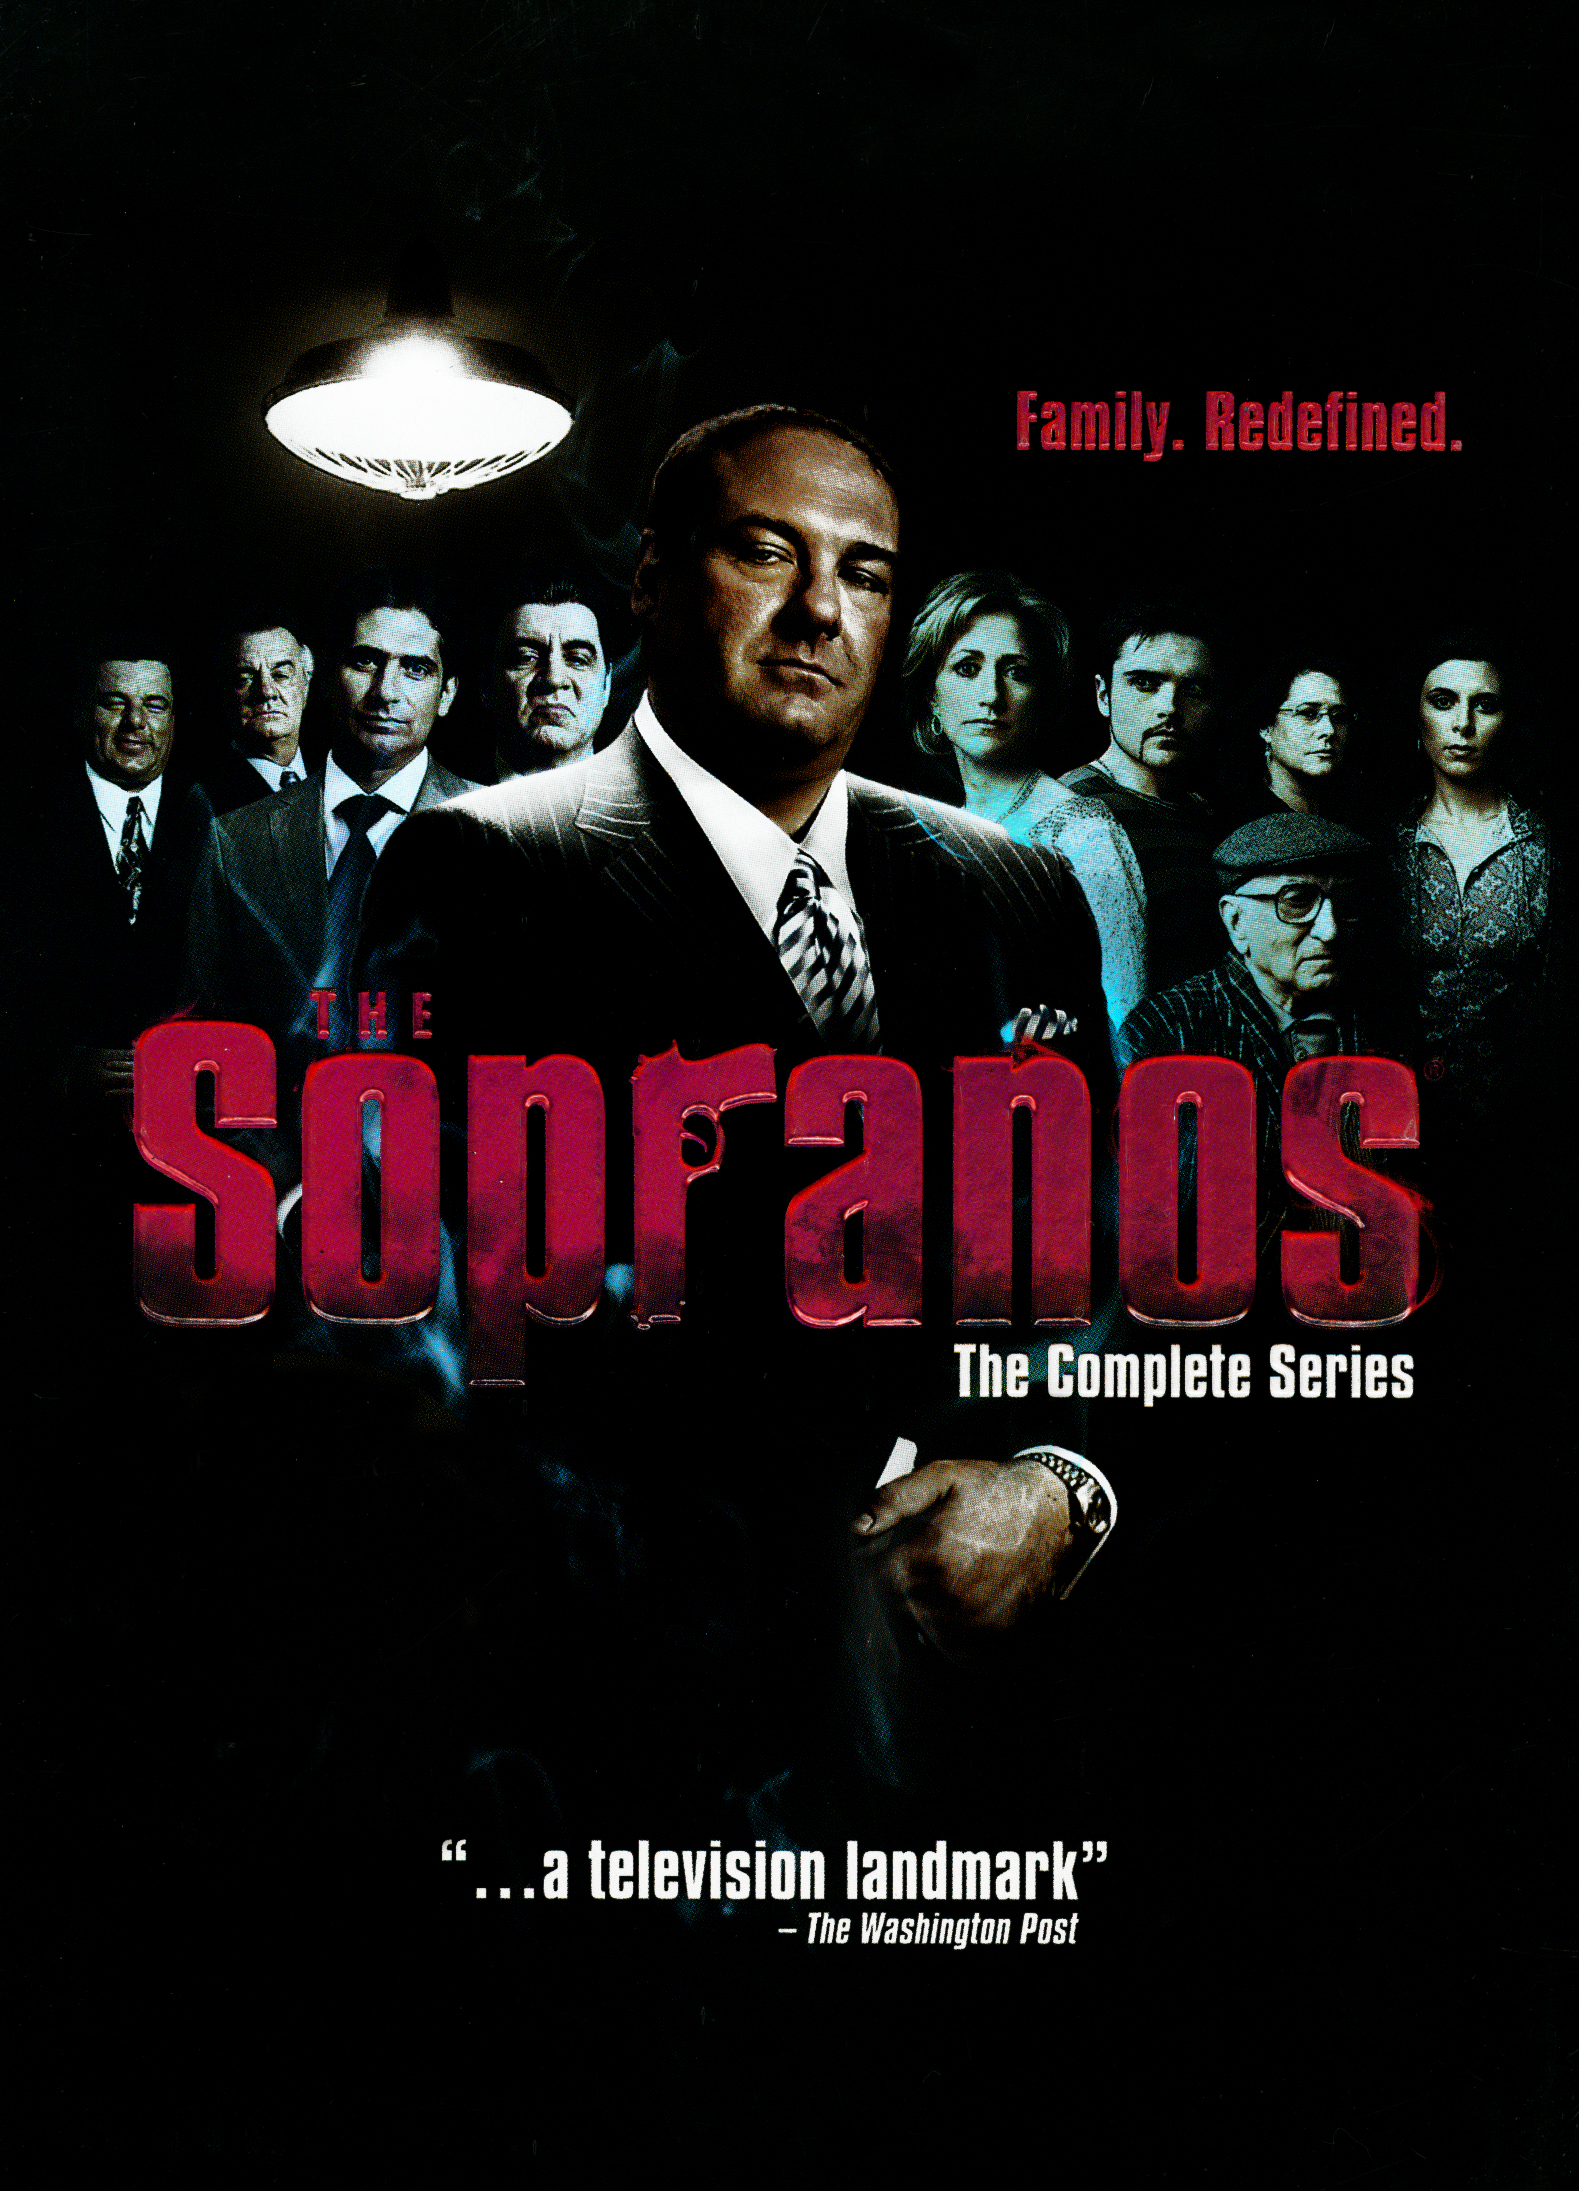 Serie Sopranos